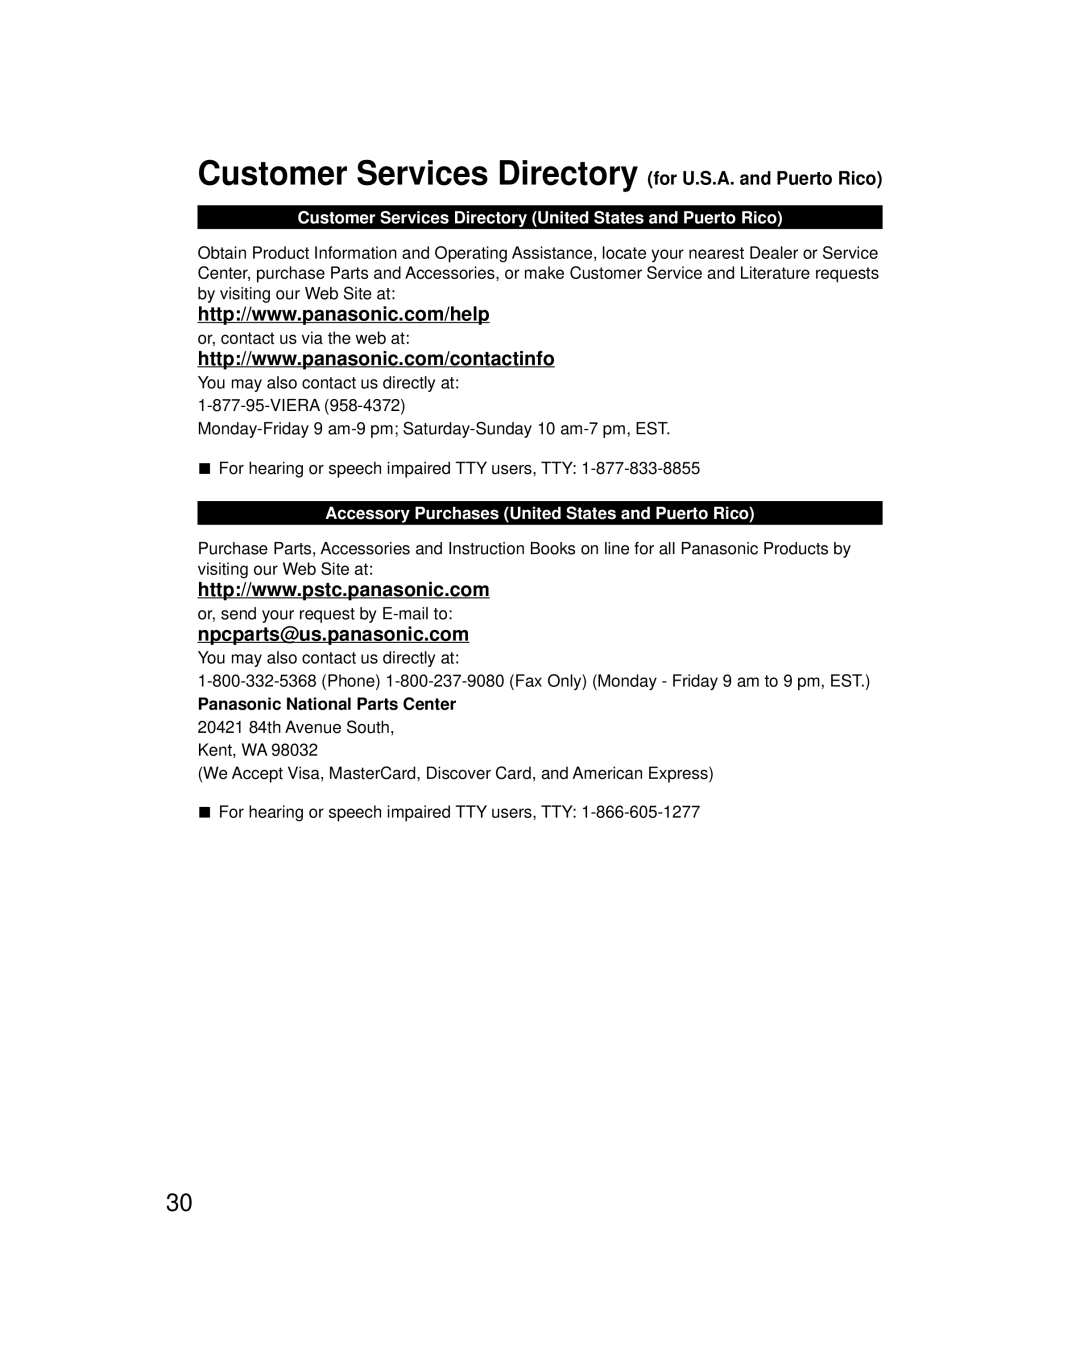 Panasonic TC-P55VT60, TC-P60VT60 Customer Services Directory for U.S.A. and Puerto Rico, npcparts@us.panasonic.com 